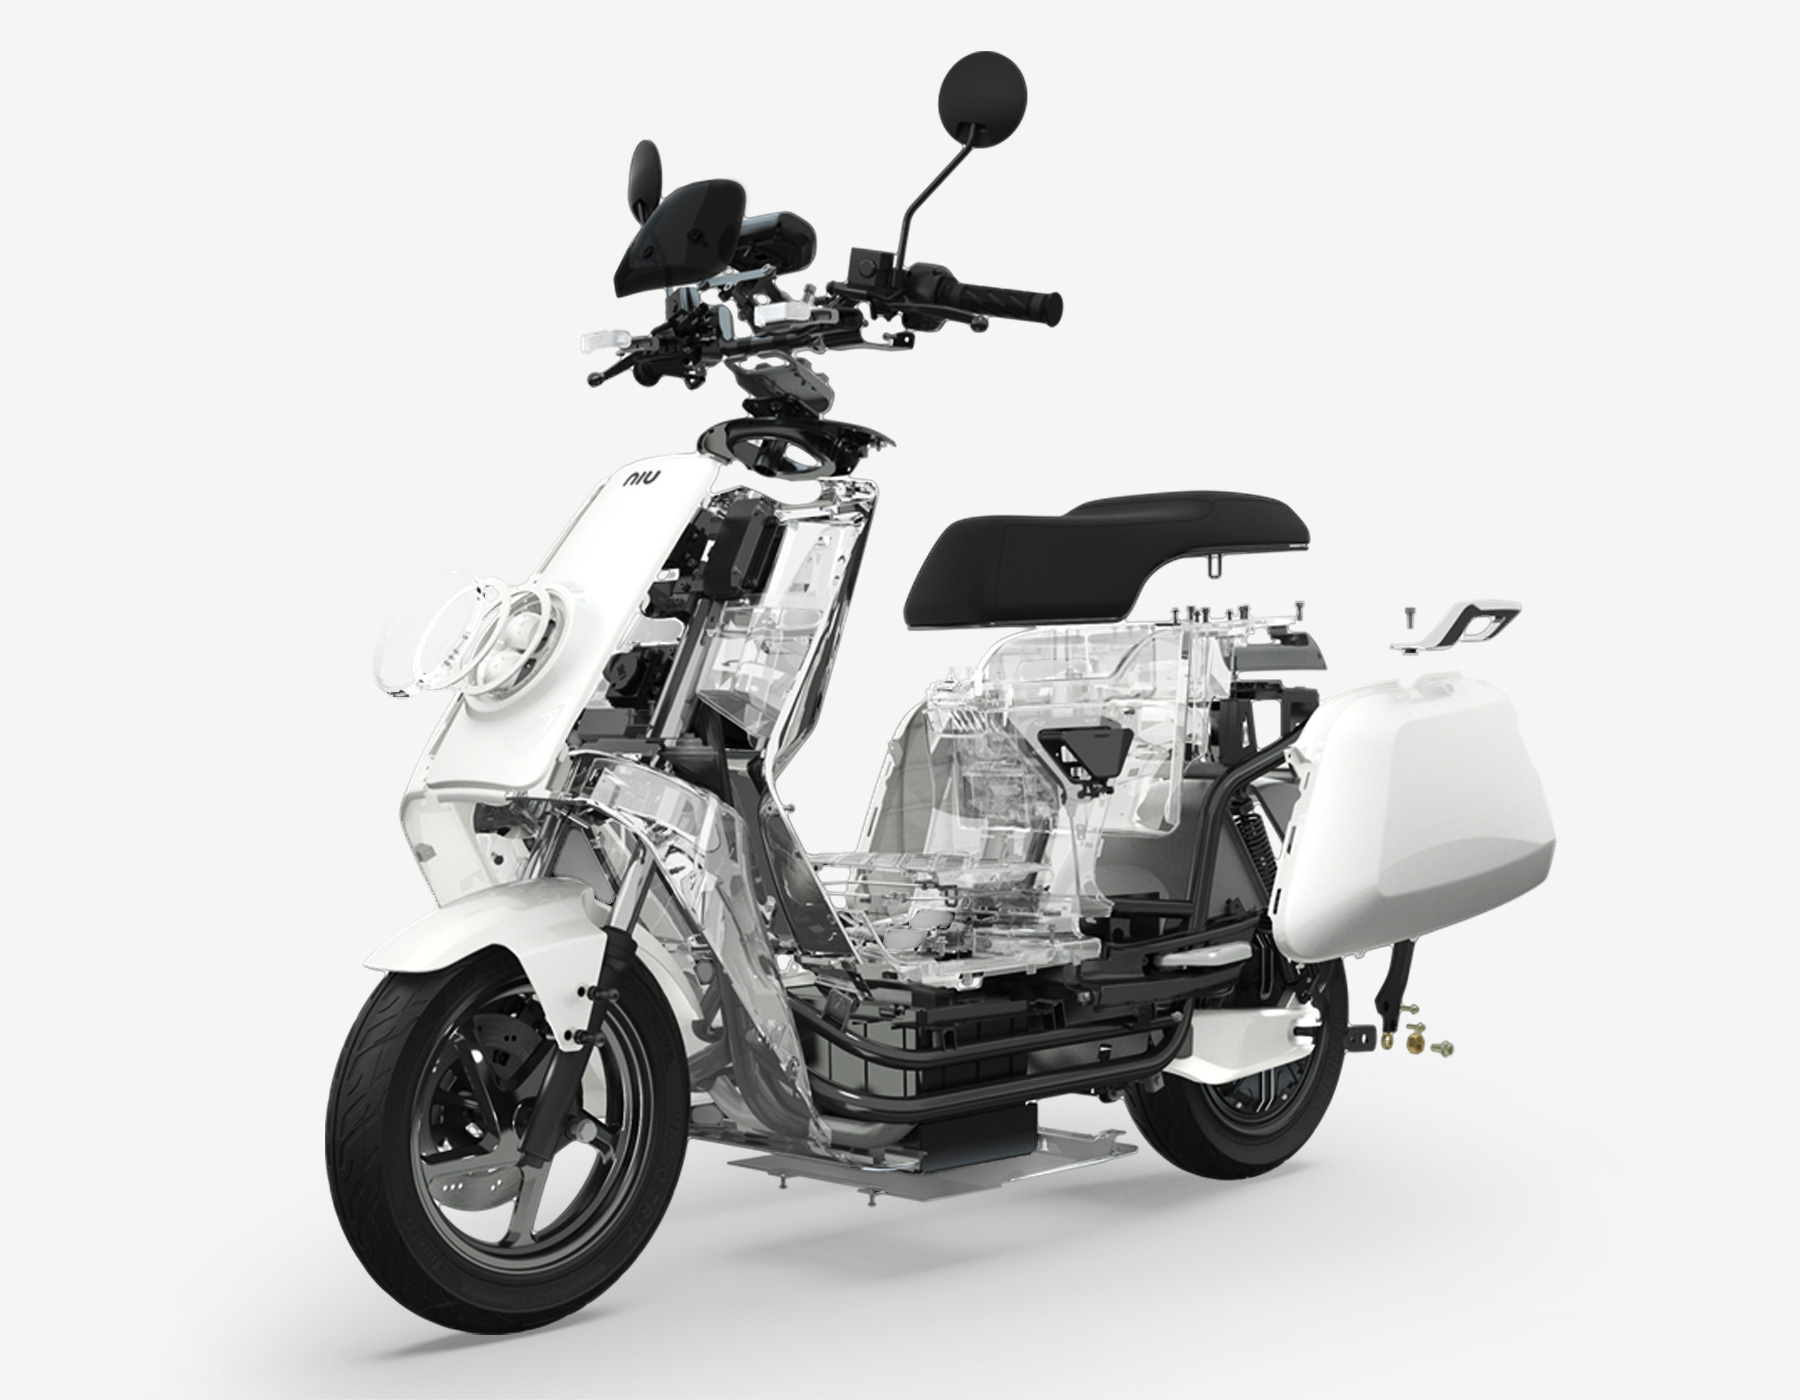 Stilride Announces Pricing, Specs For Stilride 1 Electric Motorcycle